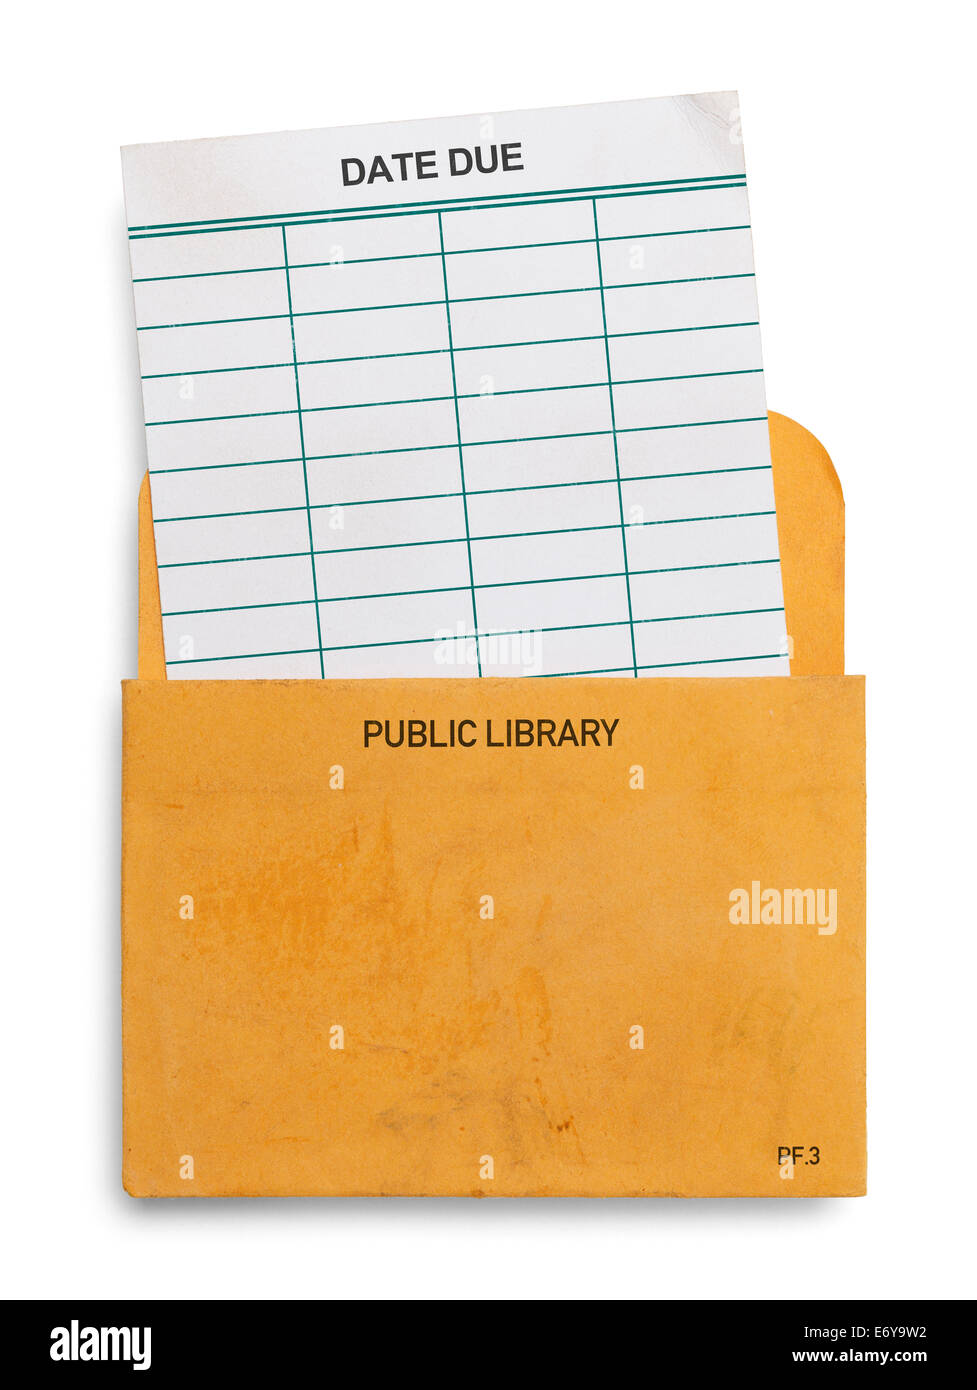 Biblioteca de libros en blanco Check Out Card aislado sobre fondo blanco. Foto de stock